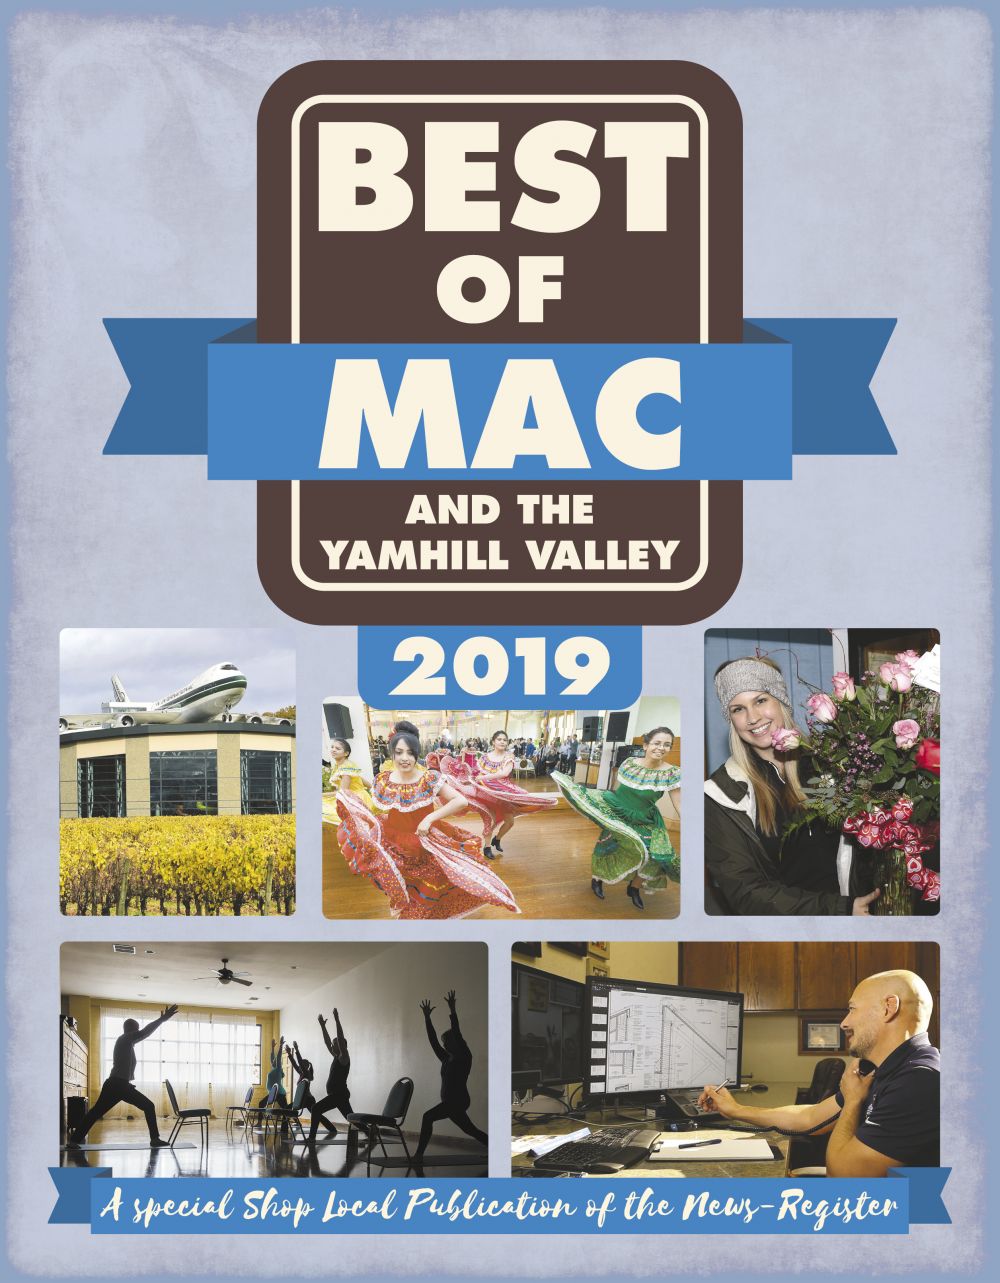 Best of Mac 2019